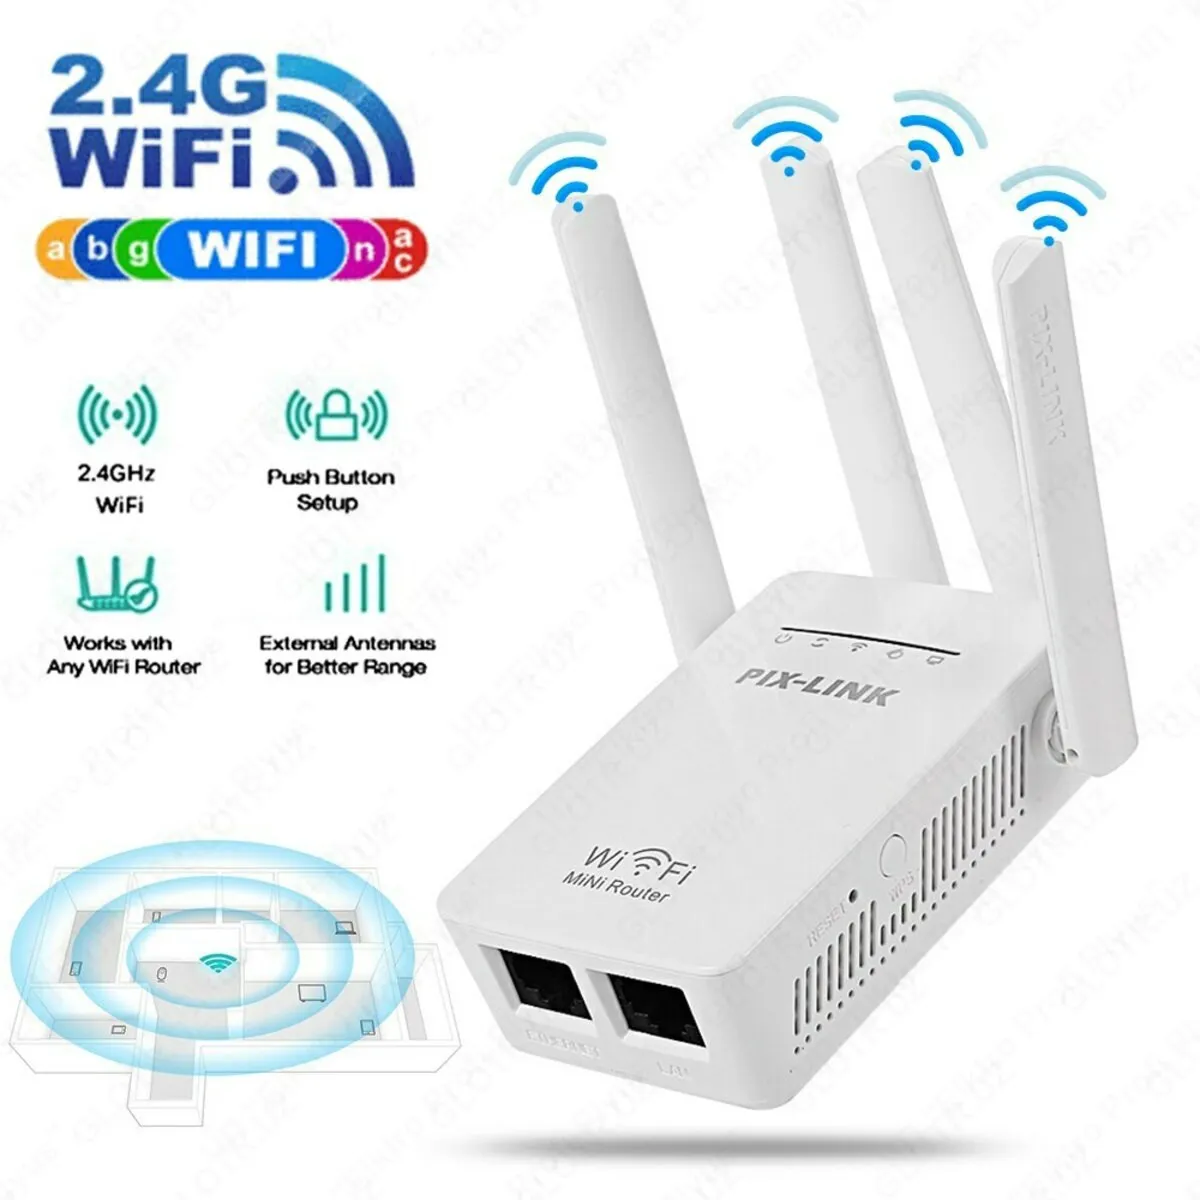 Wi-Fi signal kuchaytirgichi PIX-LINK LV-WR09#1